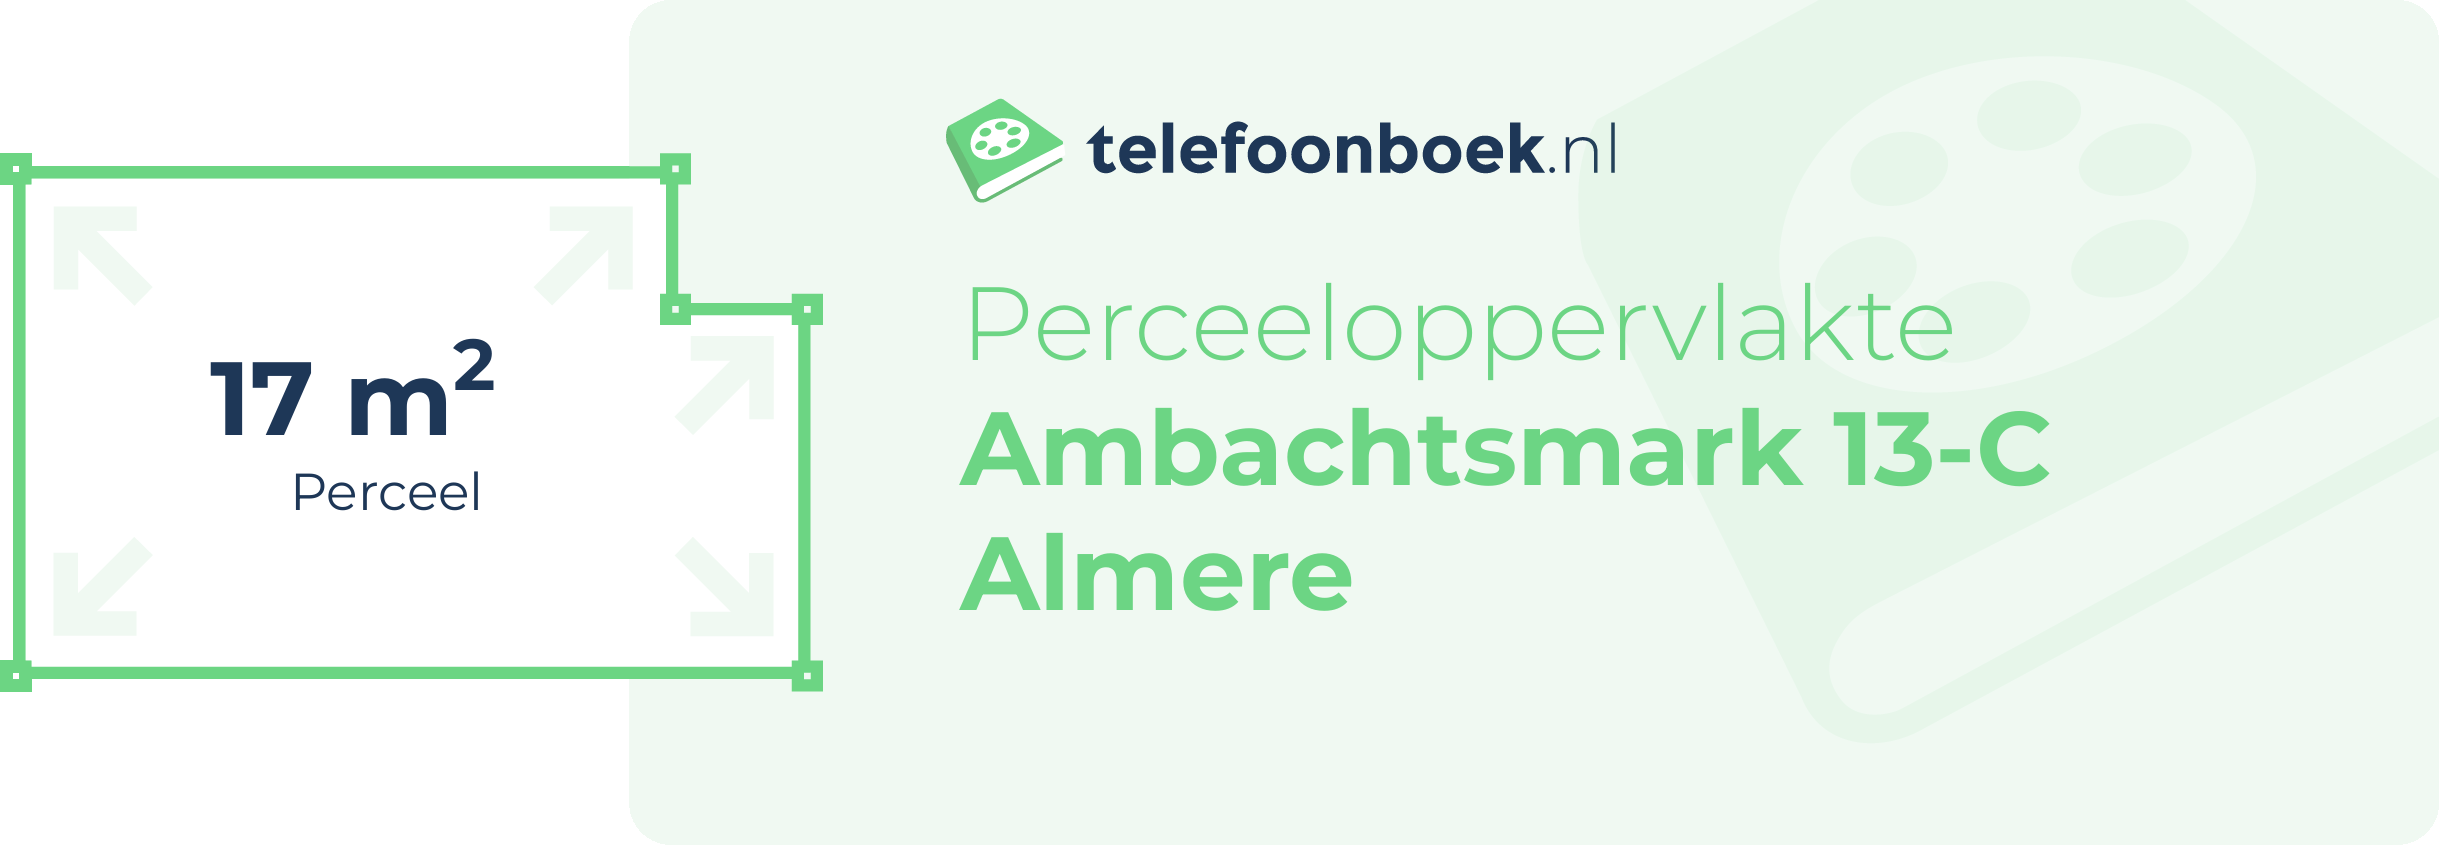 Perceeloppervlakte Ambachtsmark 13-C Almere